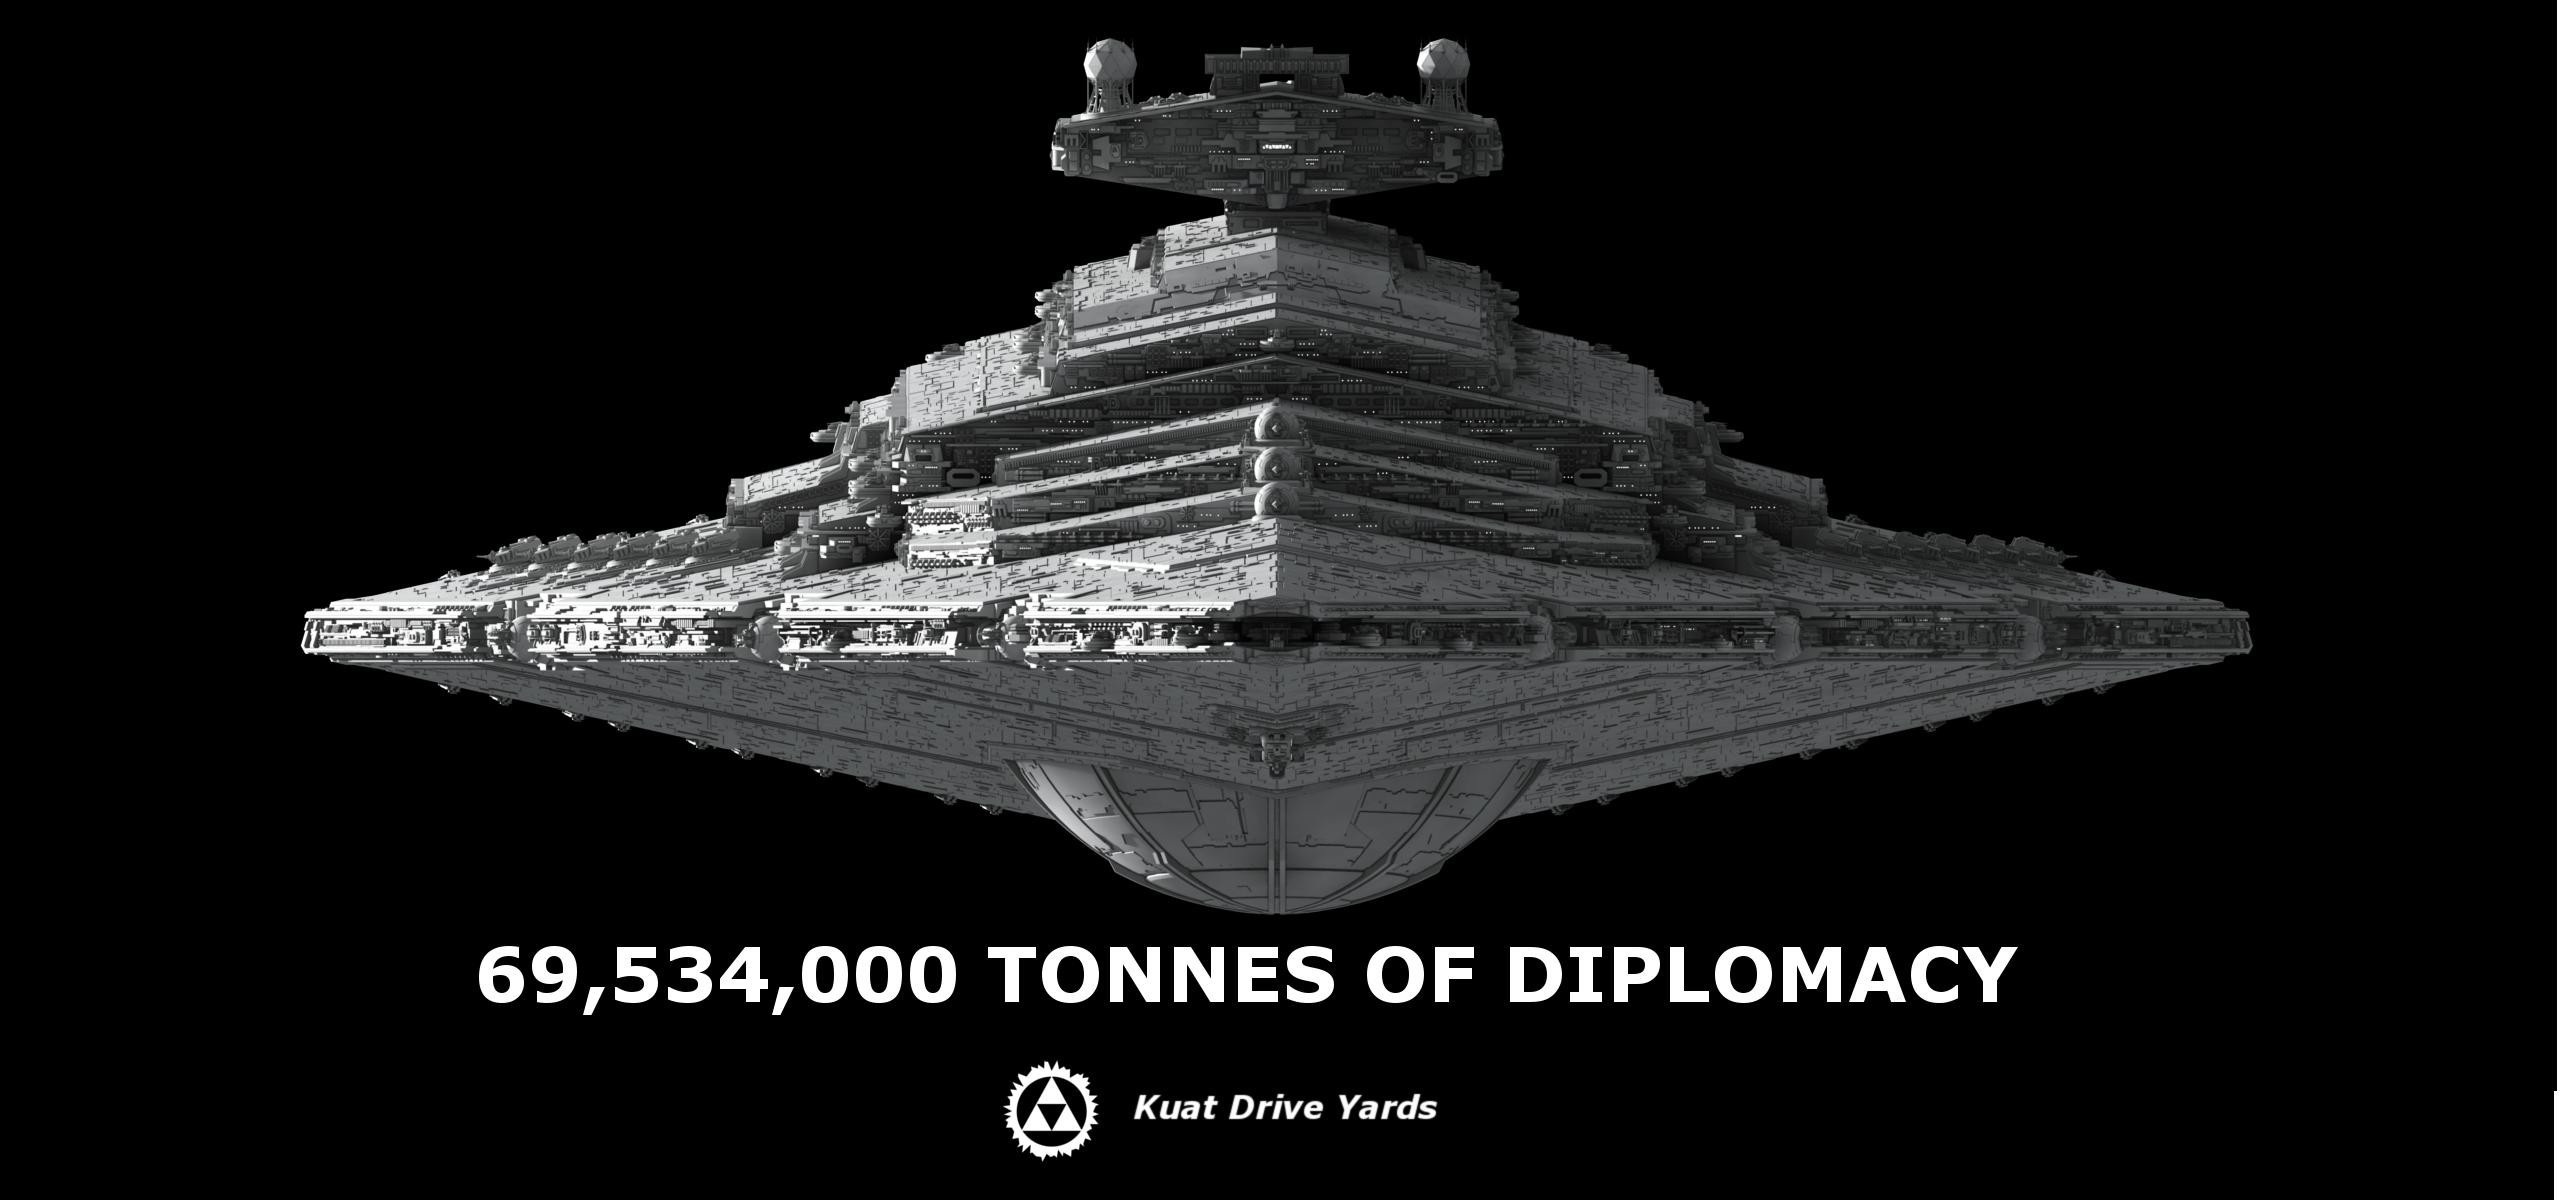 2560x1200 69,534,000 Tonnes of Diplomacy